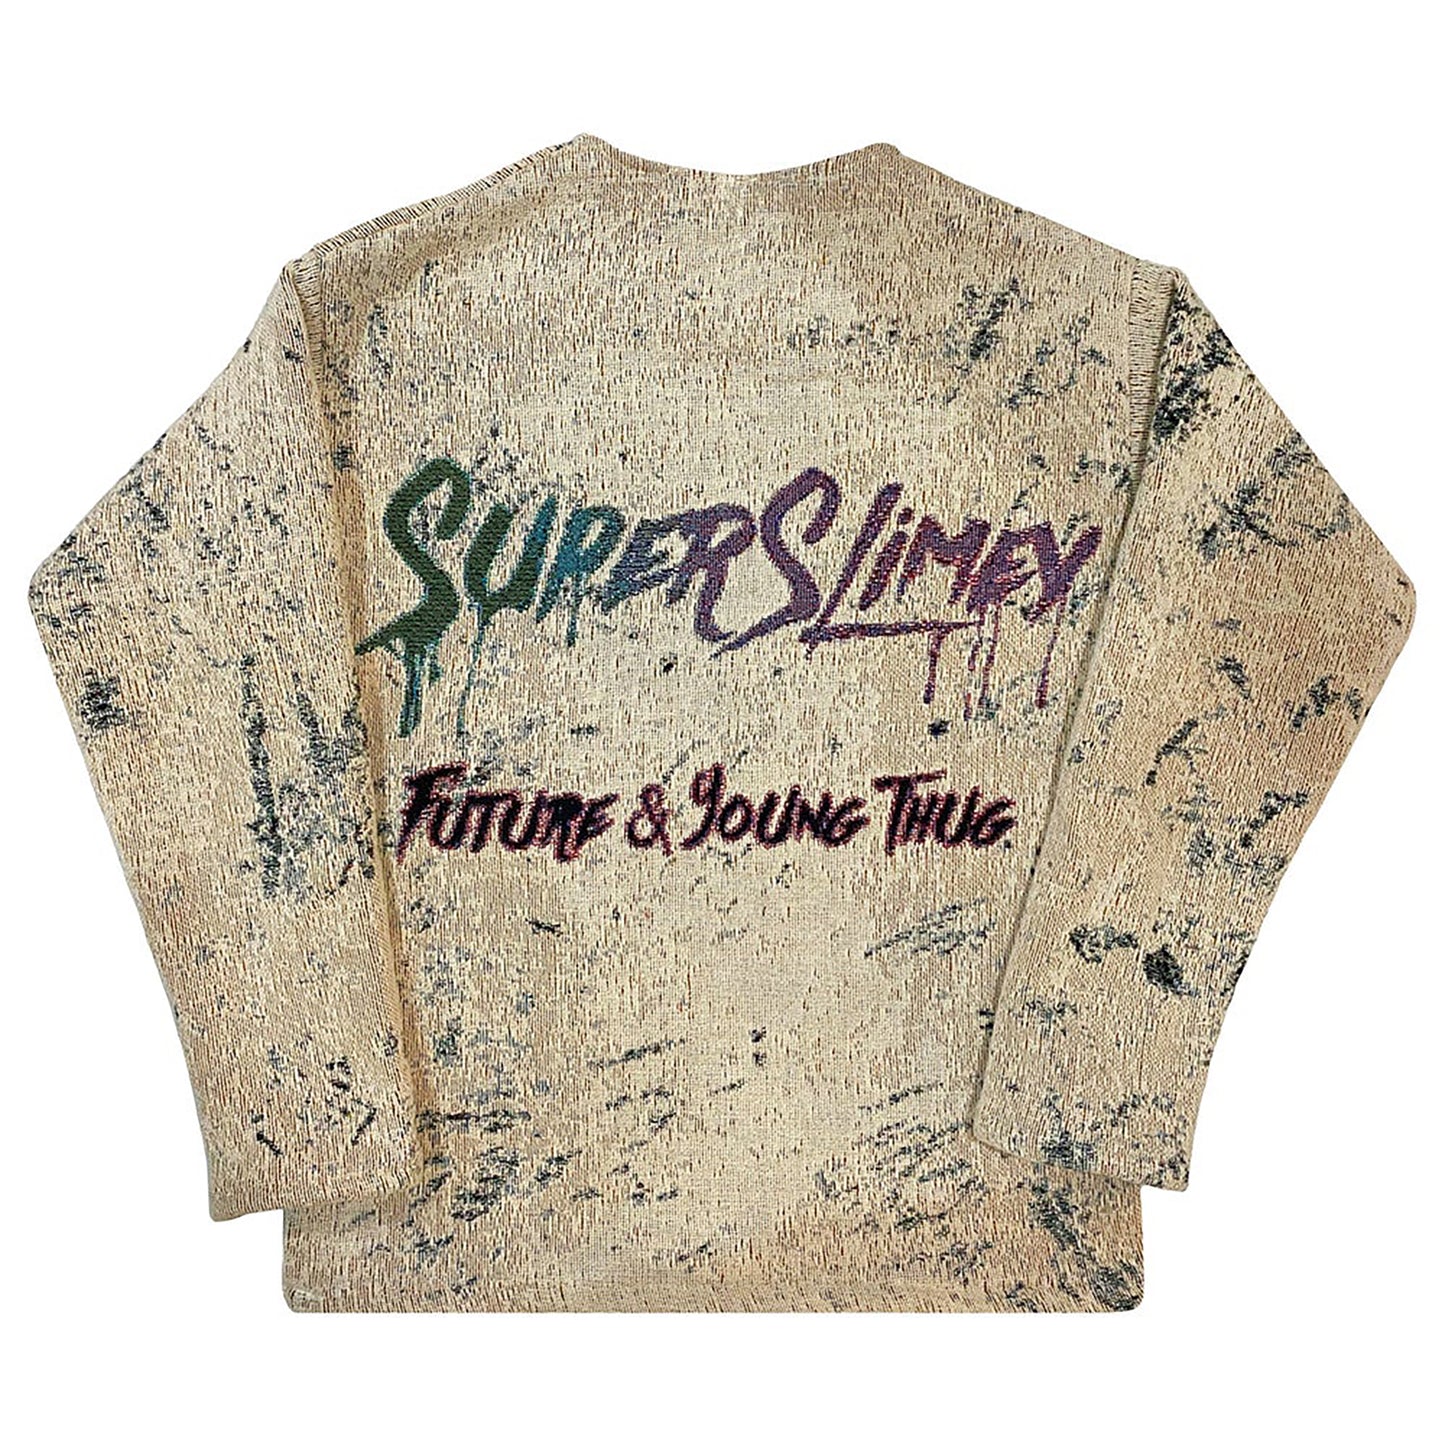 "SUPER SLIMEY"